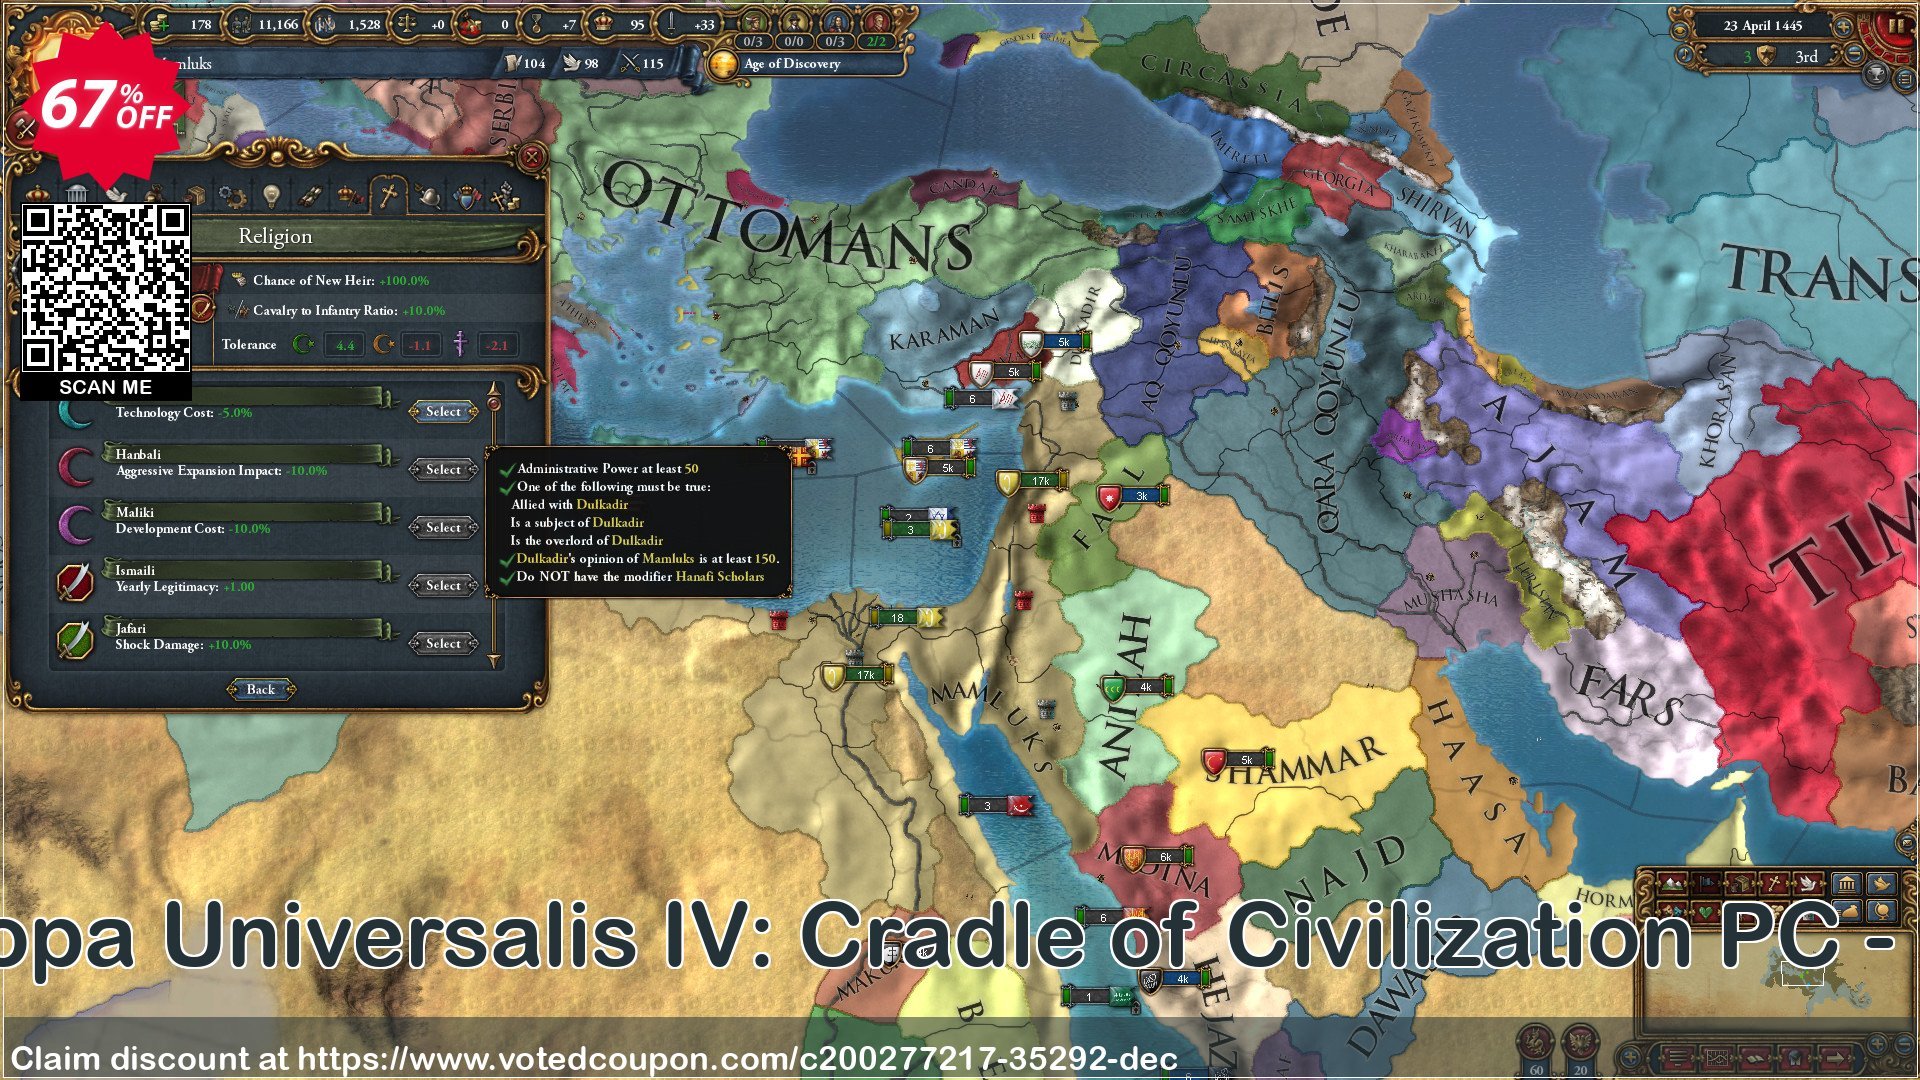 Europa Universalis IV: Cradle of Civilization PC - DLC Coupon Code Apr 2024, 67% OFF - VotedCoupon